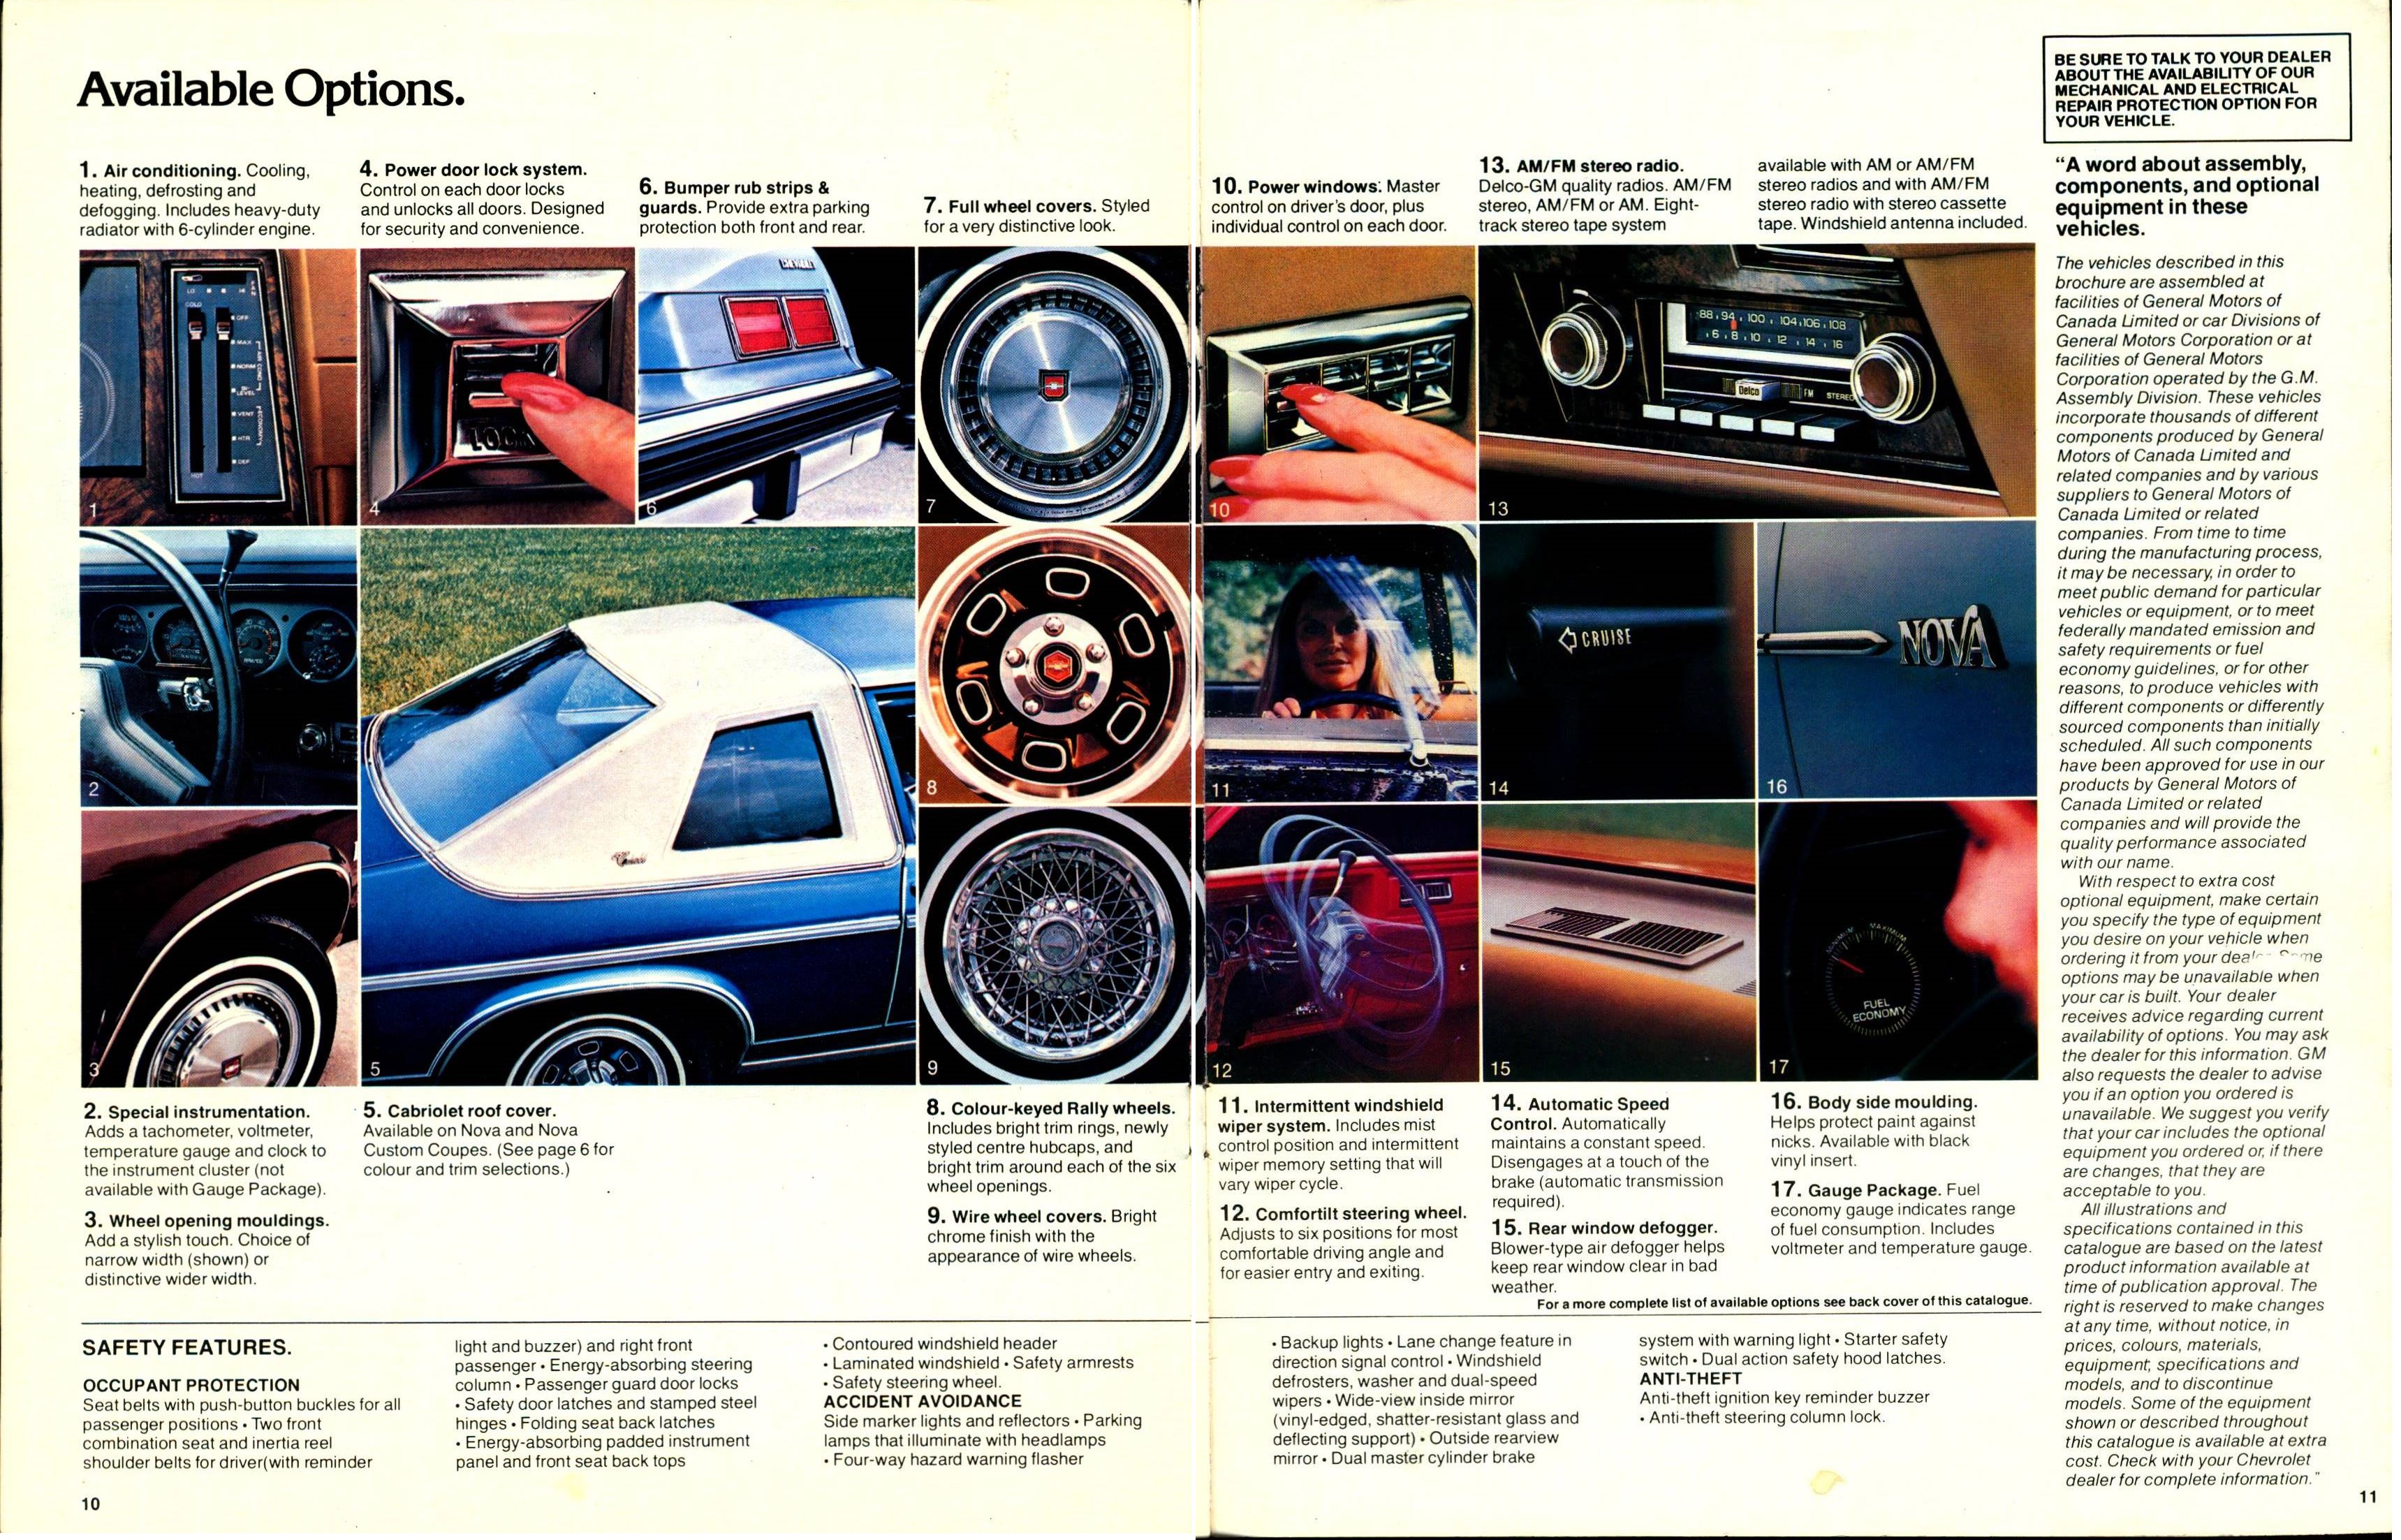 1979 Chevrolet Nova Brochure (Cdn) 10-11